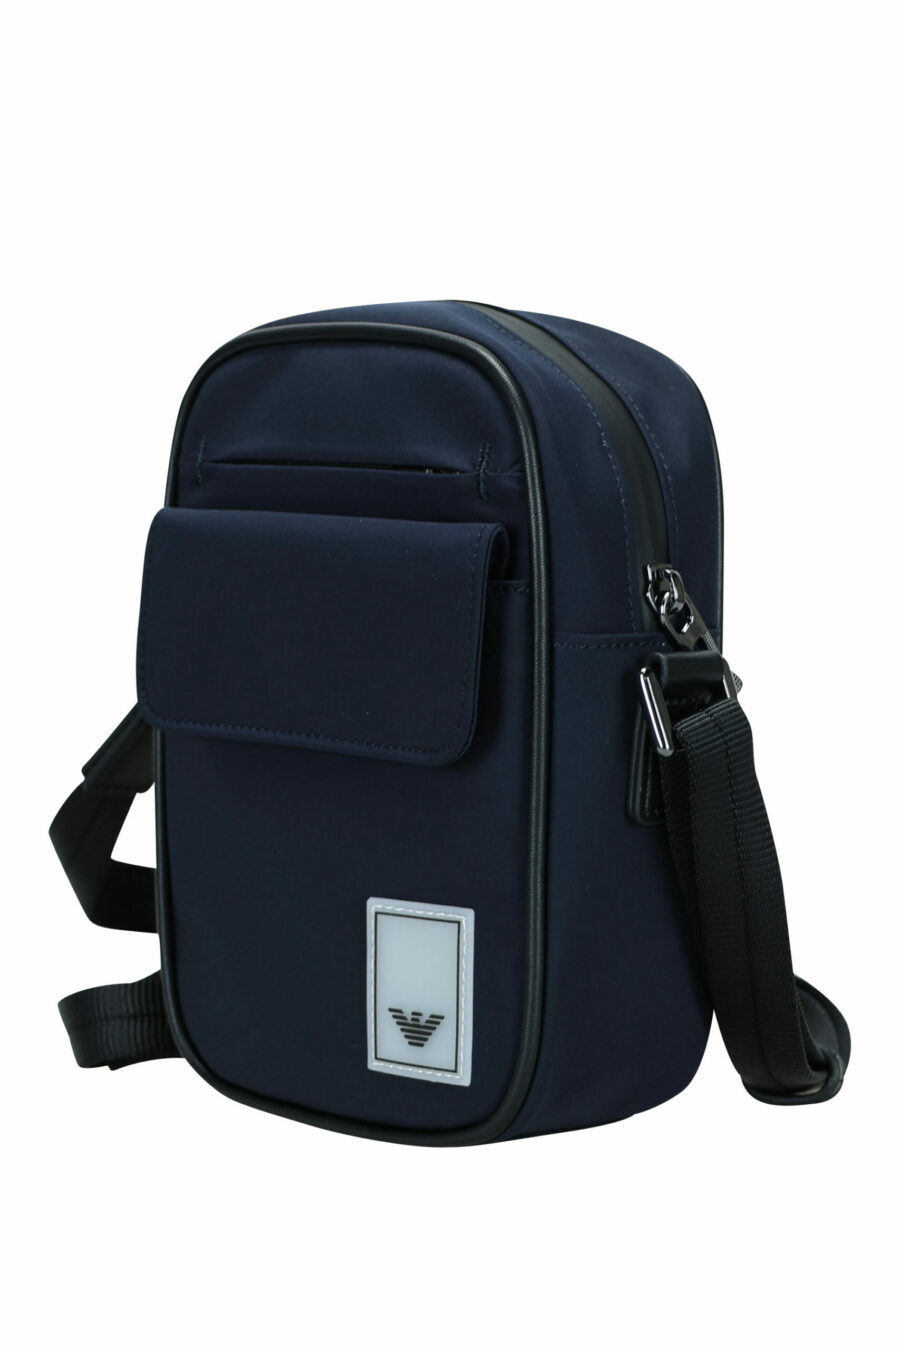 Dark blue shoulder bag with mini logo eagle tag - 8058997154802 1 scaled